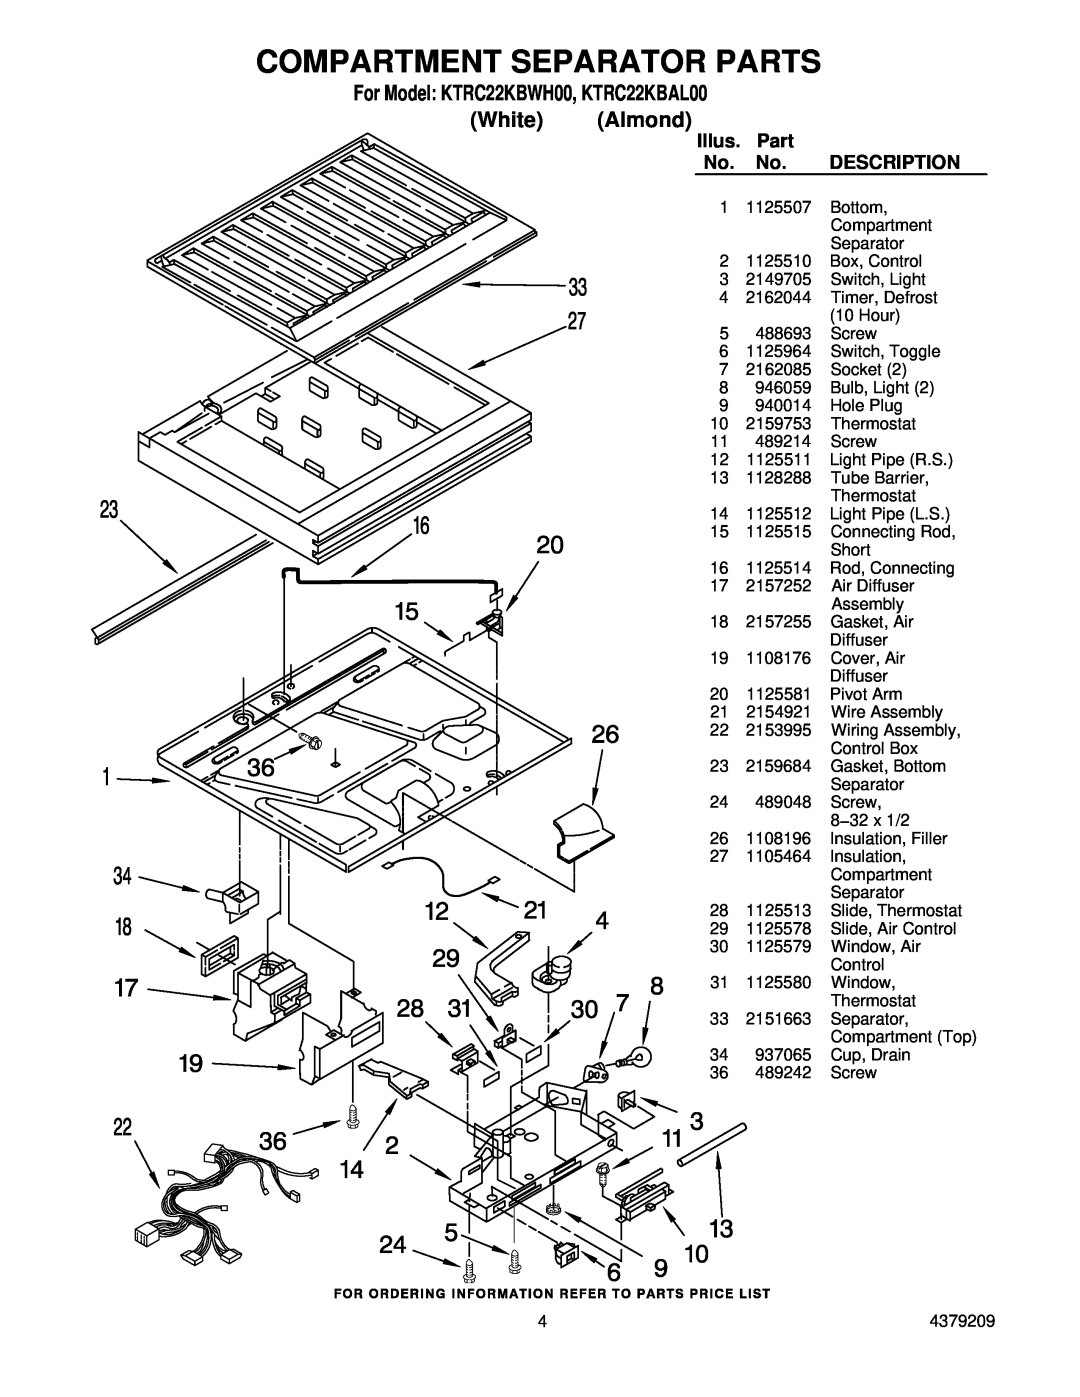 KitchenAid manual Compartment Separator Parts, For Model KTRC22KBWH00, KTRC22KBAL00 White Almond, Illus, Description 